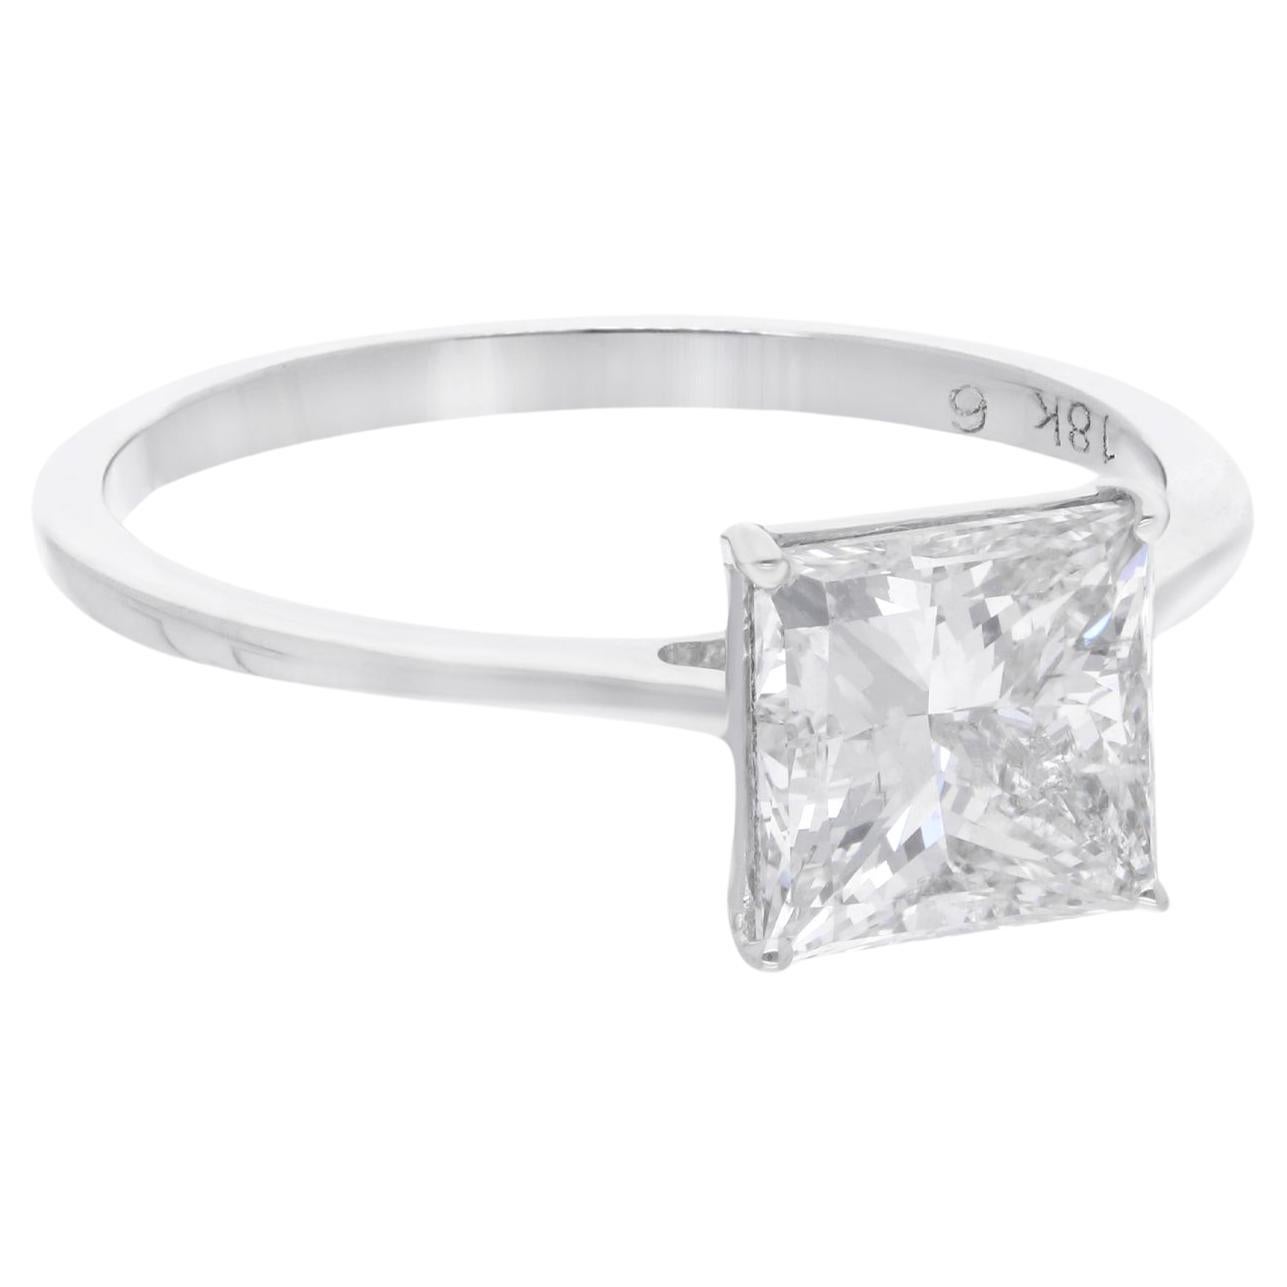 Solitaire Princess Cut Diamond Wedding Ring 18 Karat White Gold Handmade Jewelry For Sale